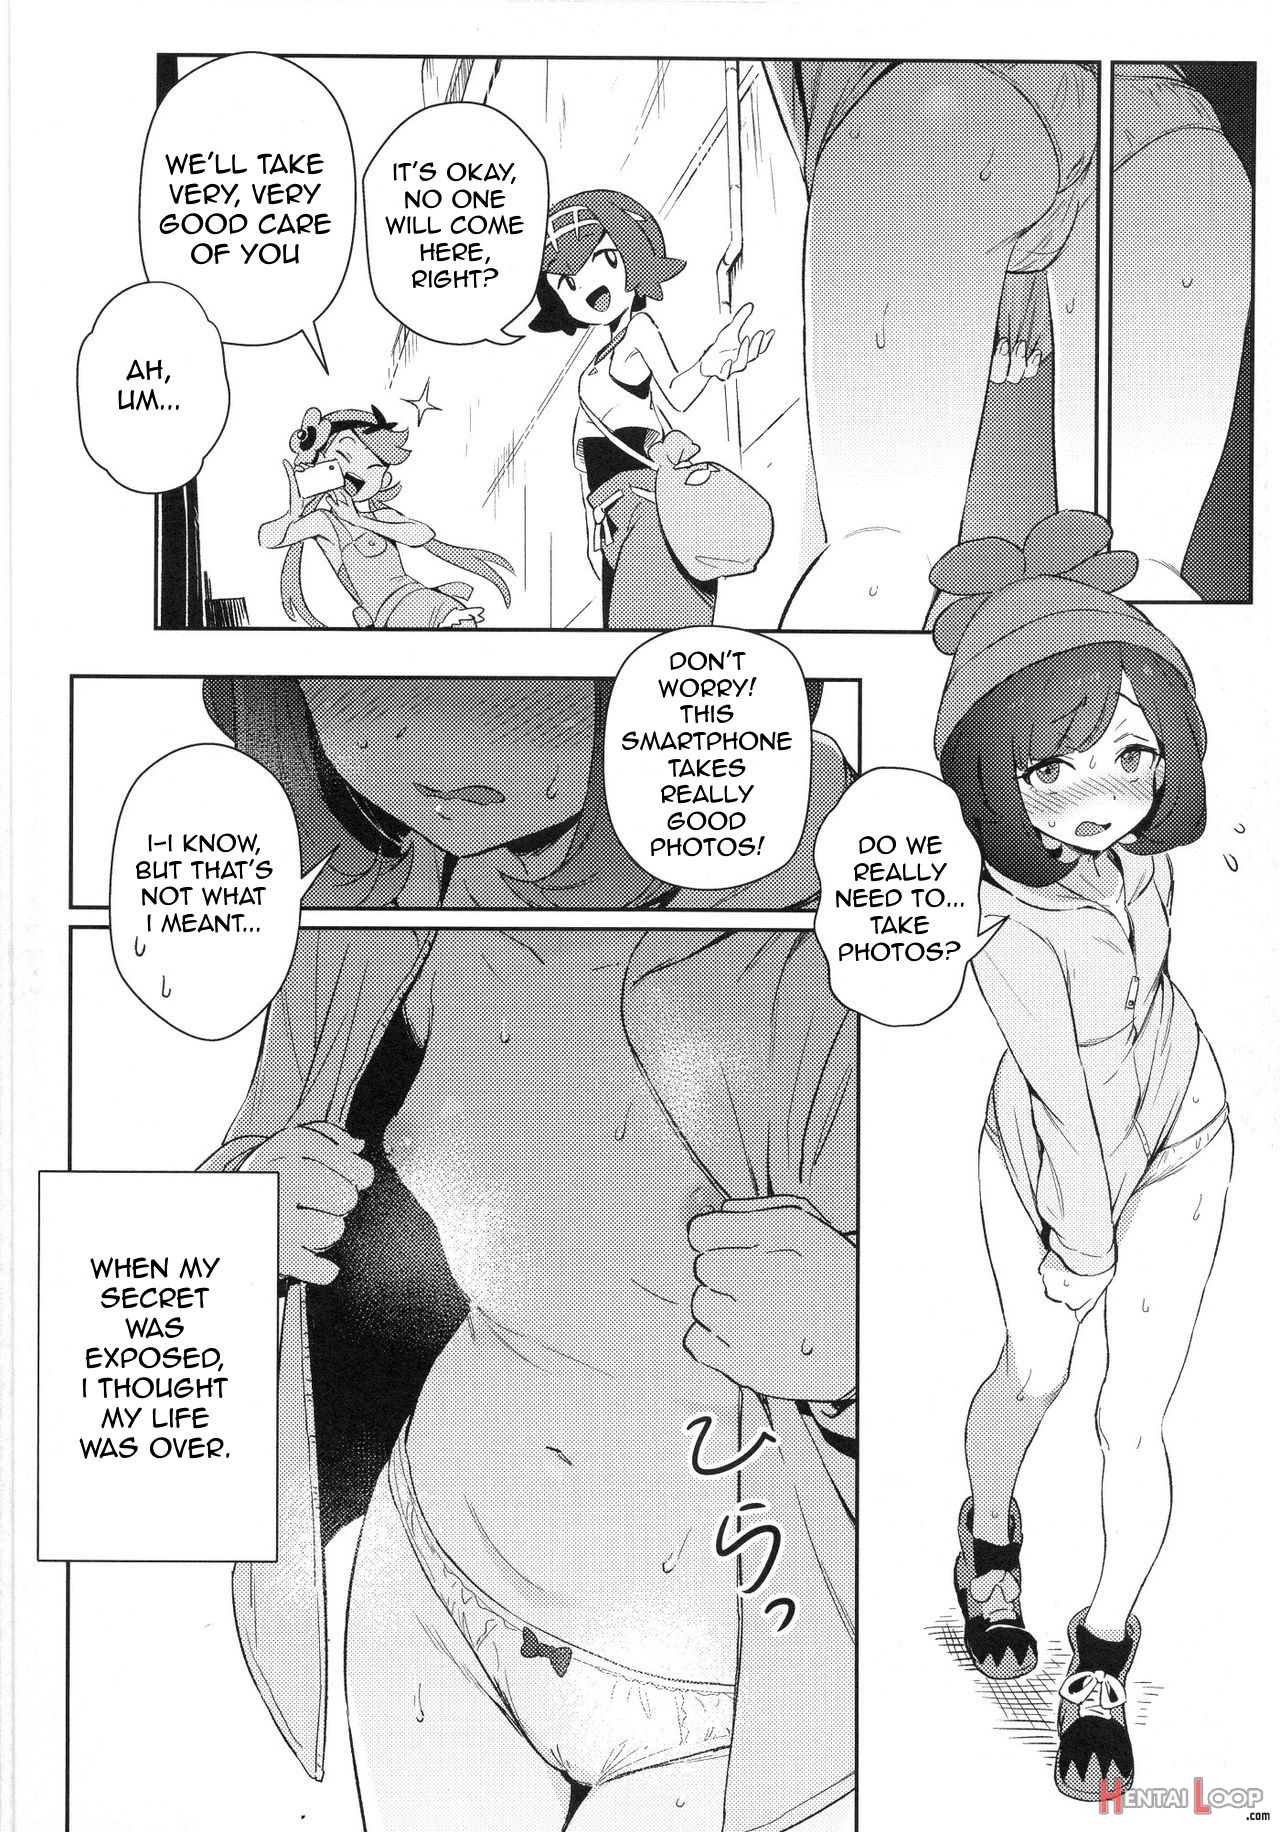 Girl's Little Secret Adventure page 4